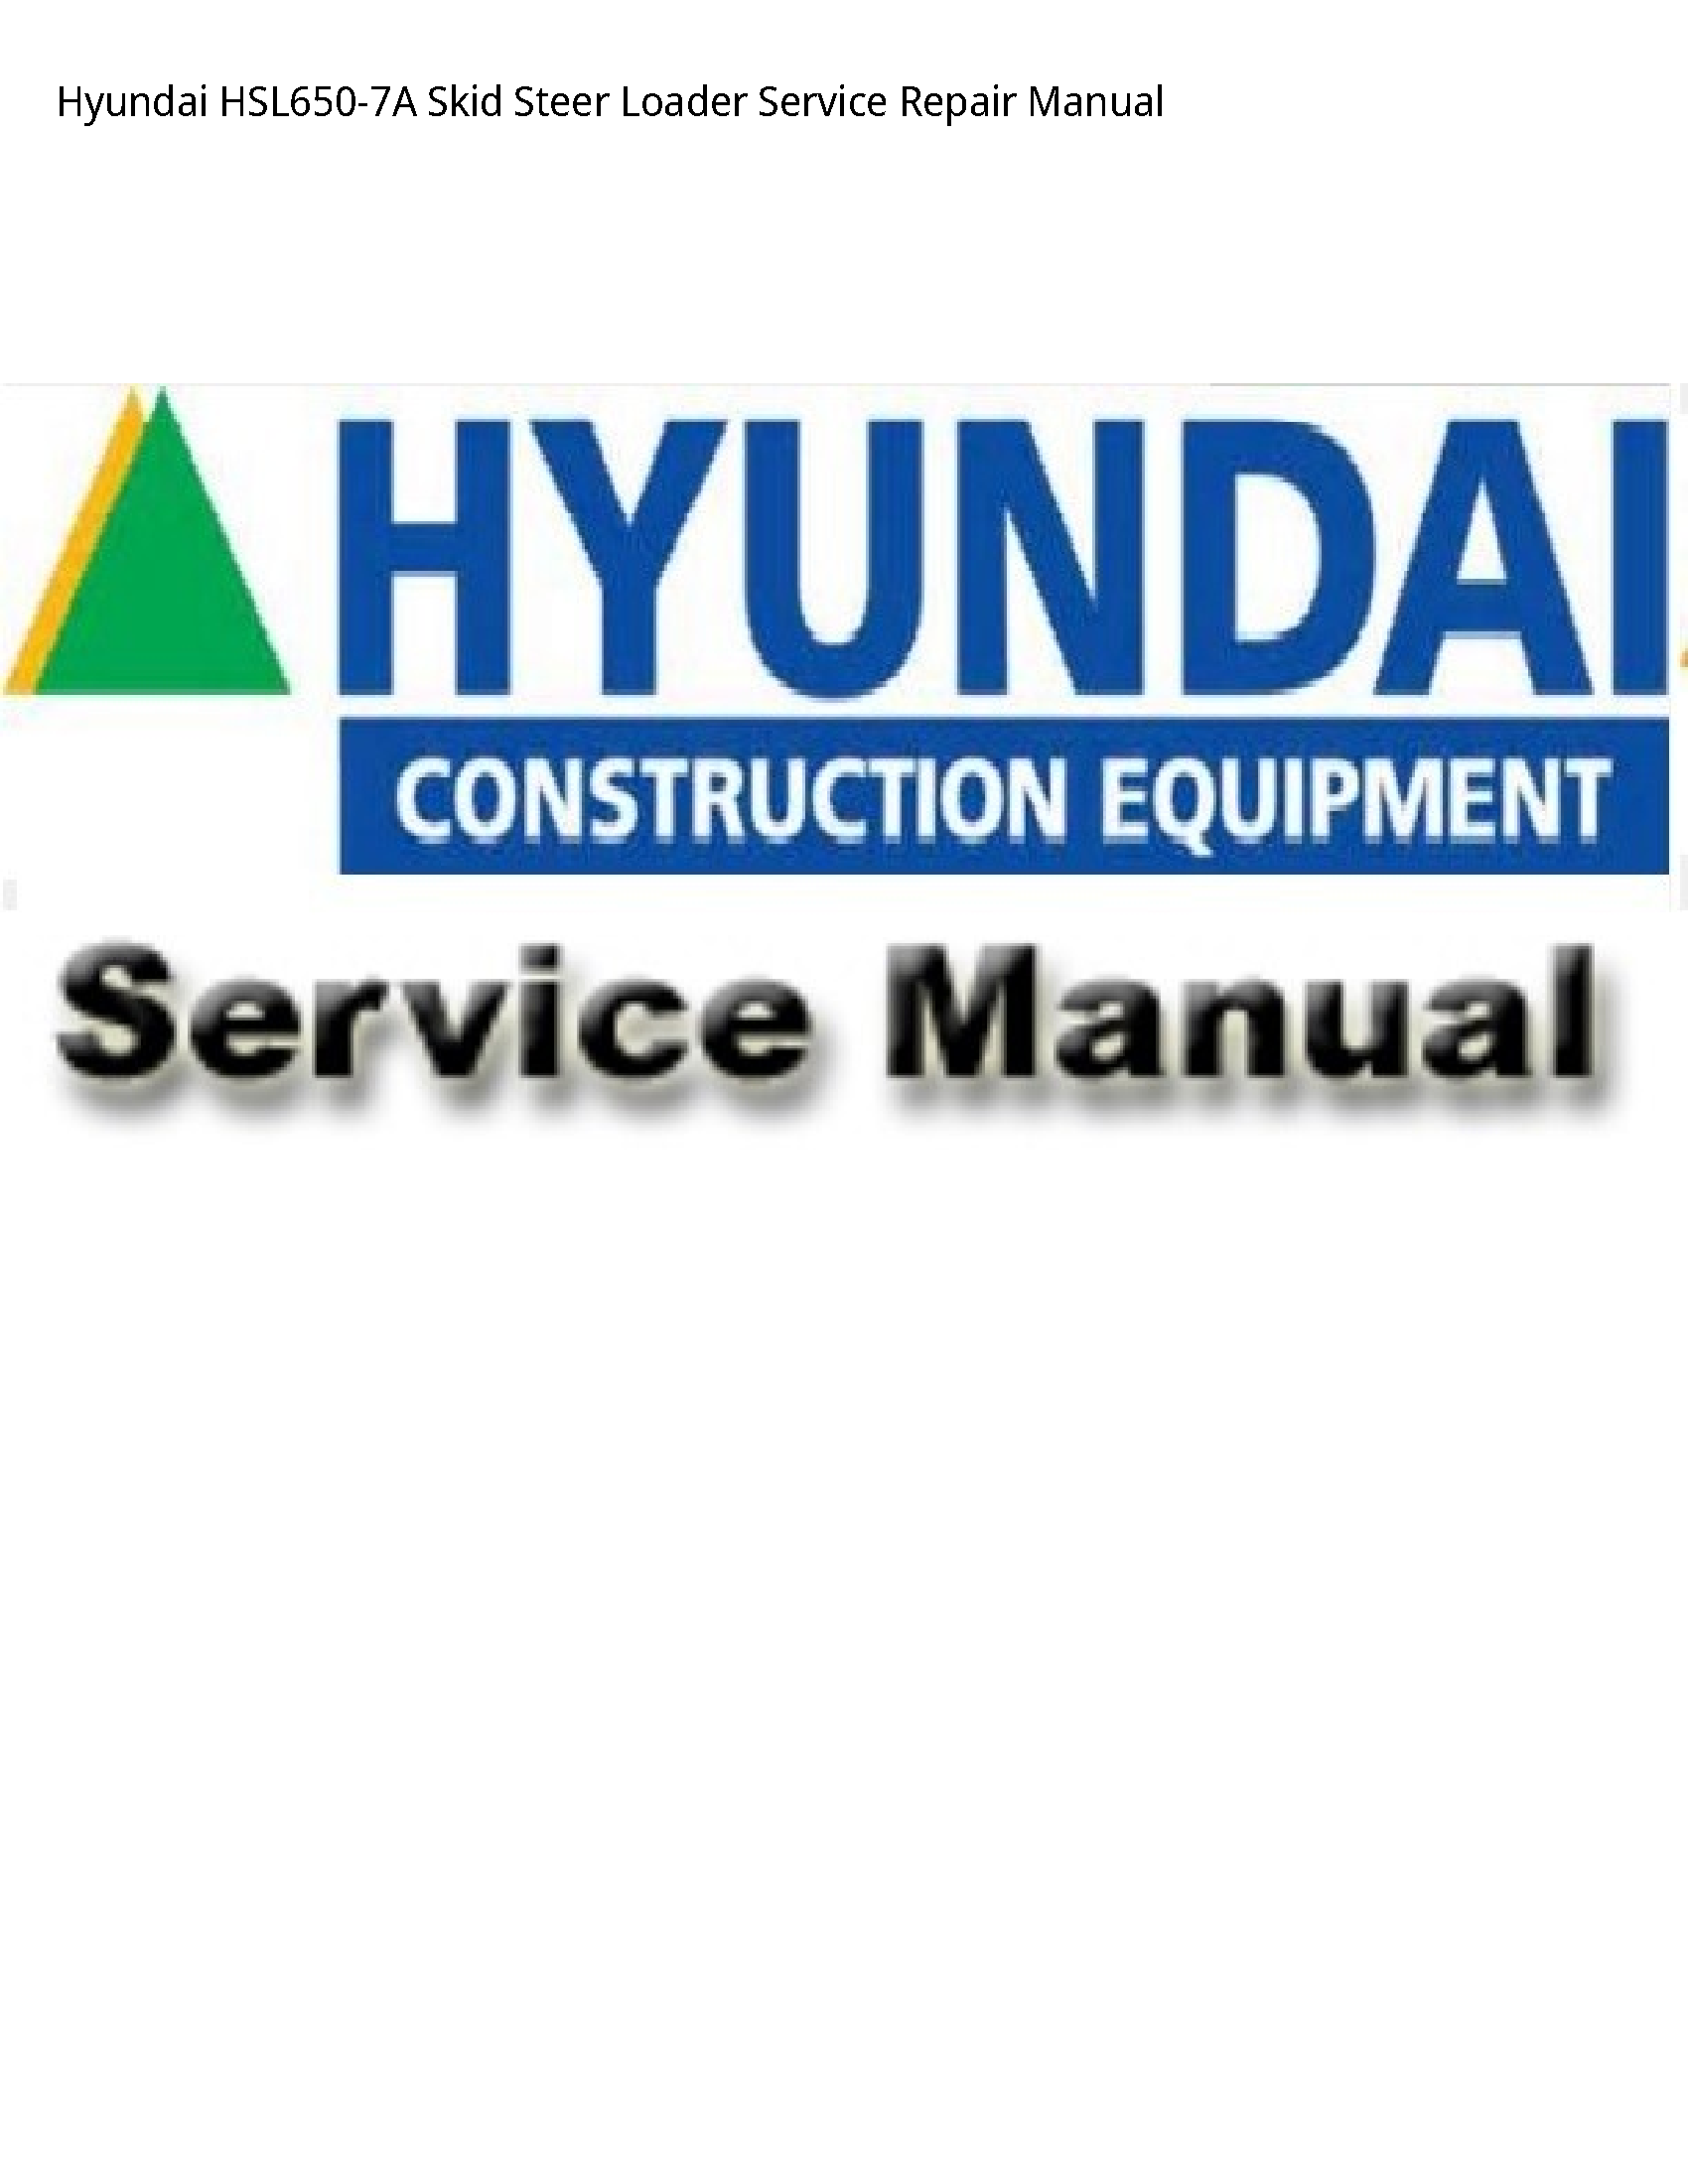 Hyundai HSL650-7A Skid Steer Loader manual